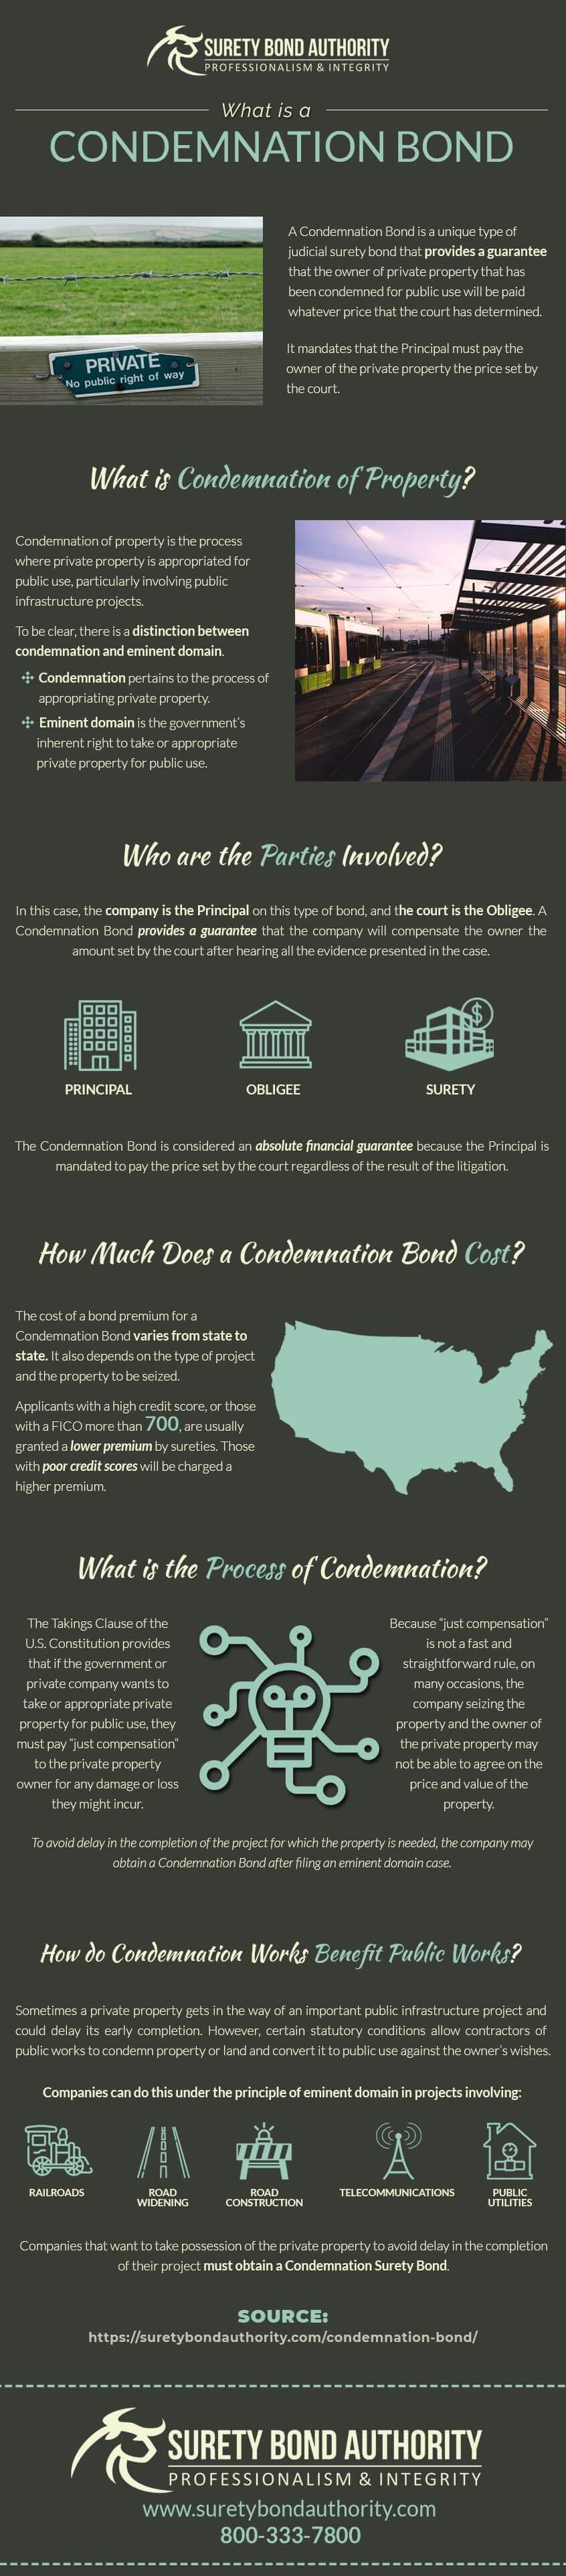 Condemnation Bond Infographic